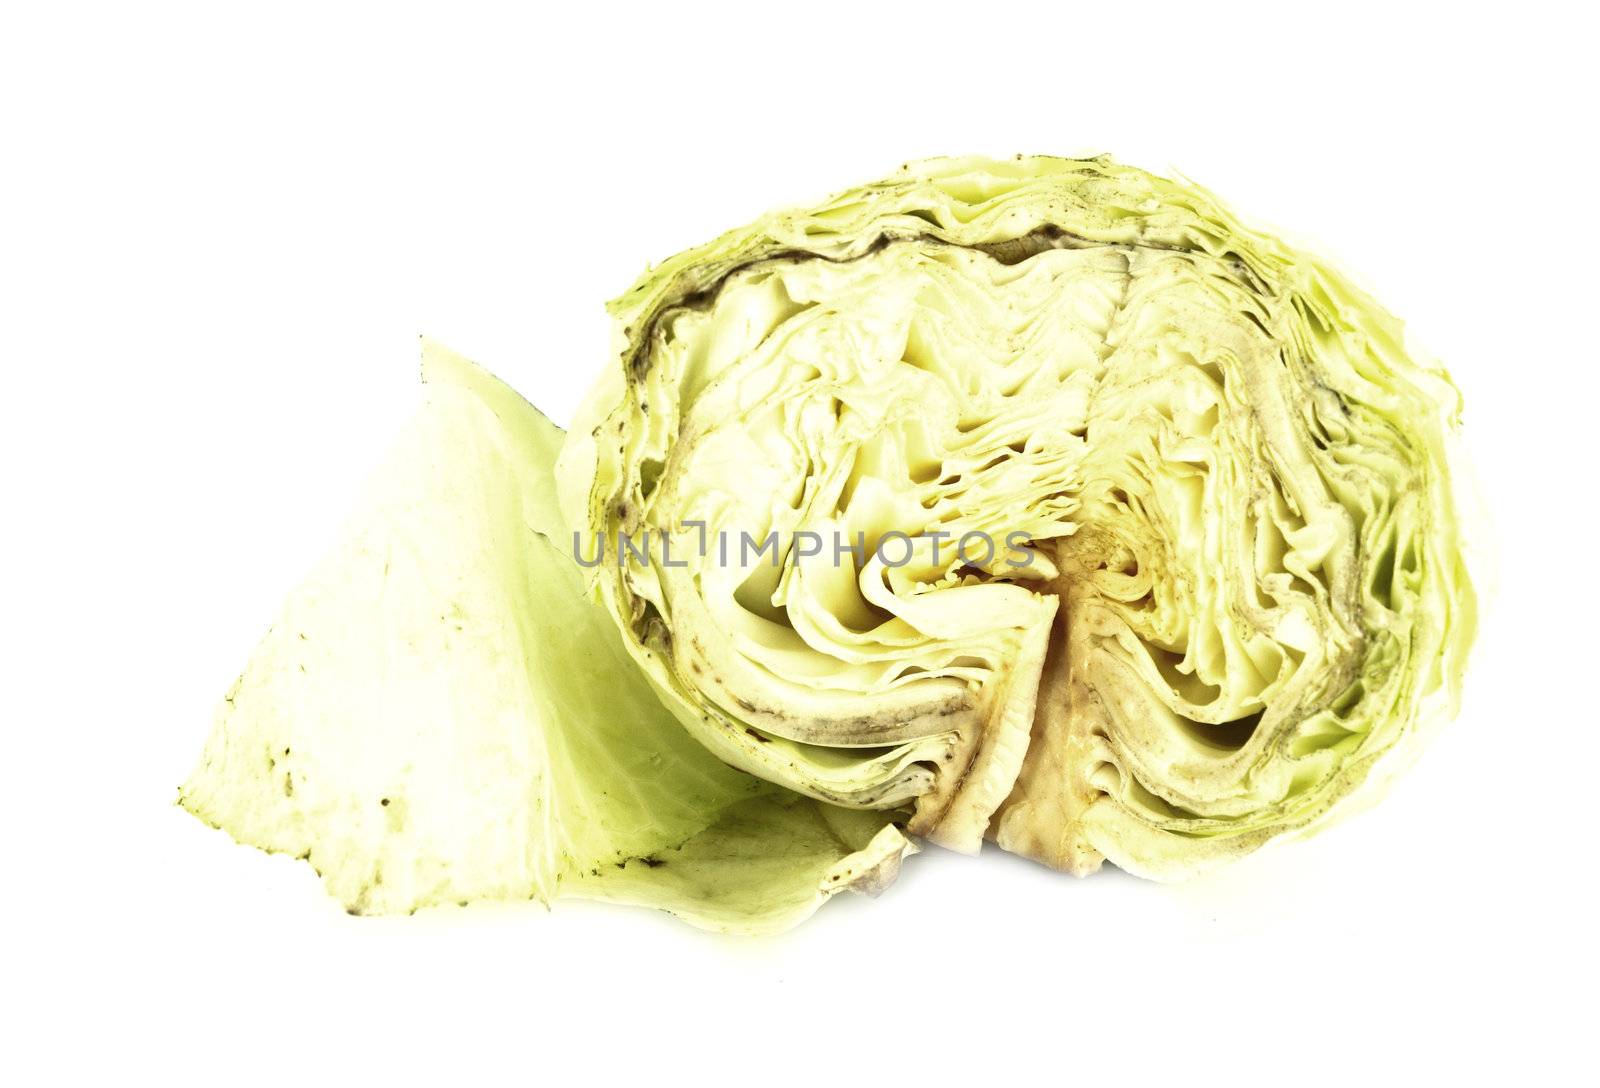 cabbage cut in half on white by geargodz